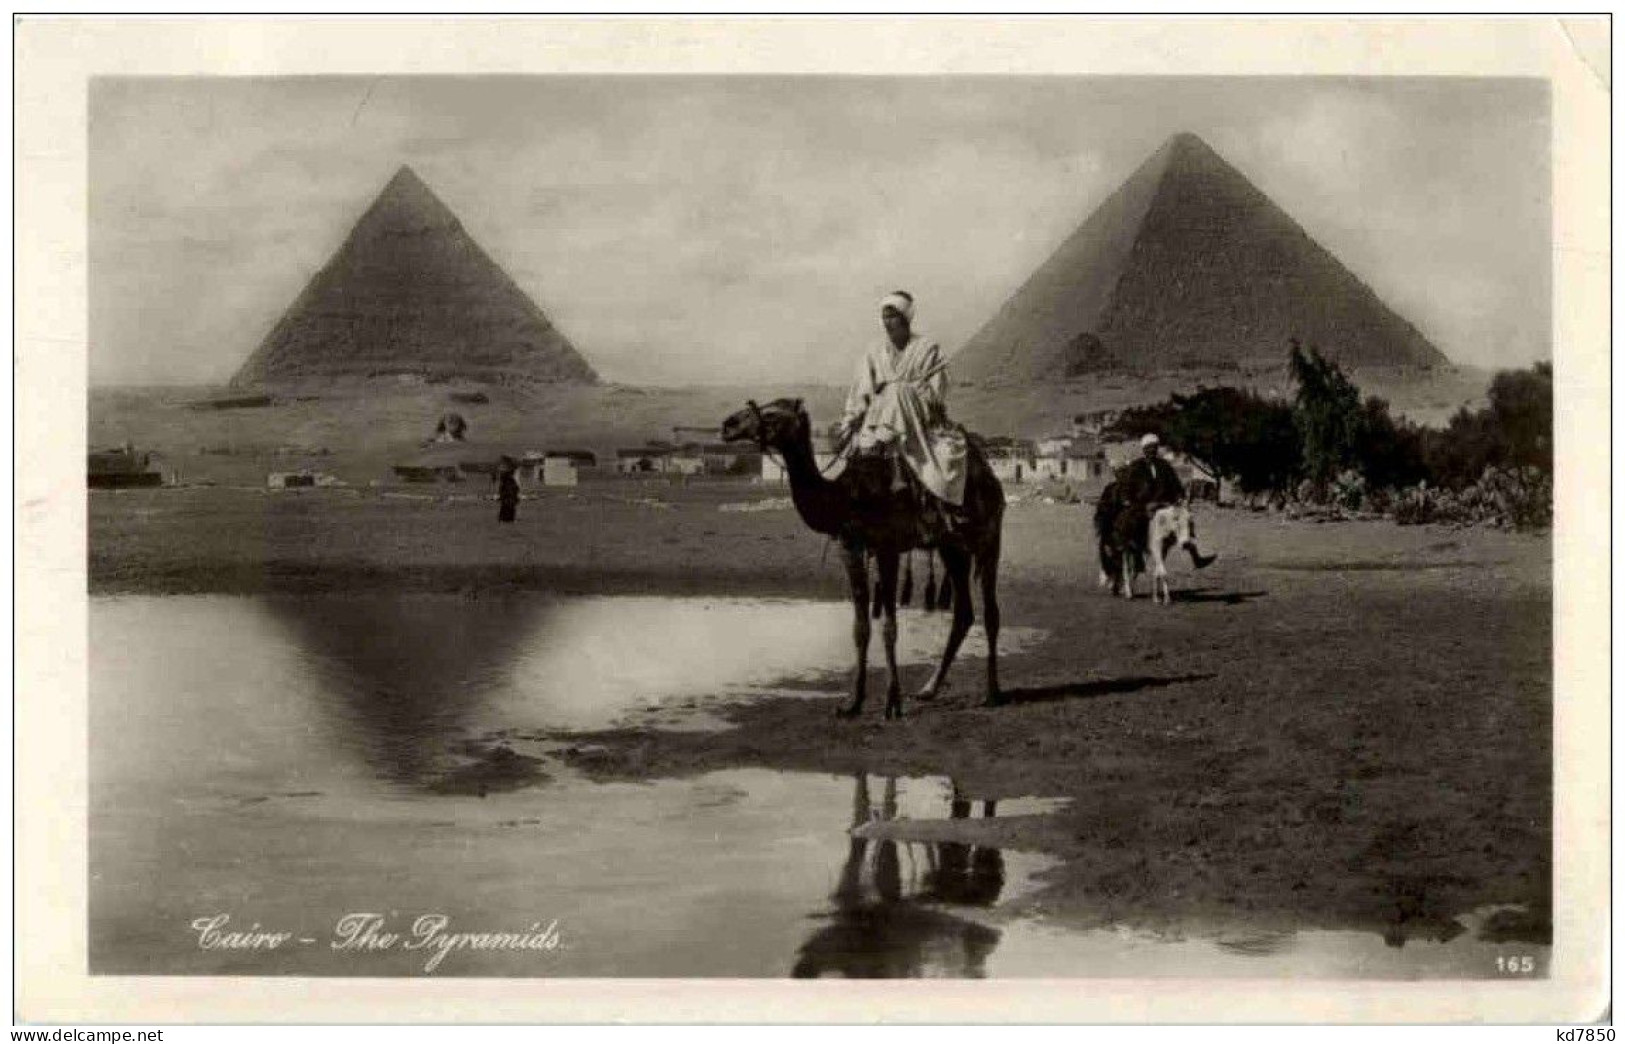 Cairo - The Pyramides - Cairo